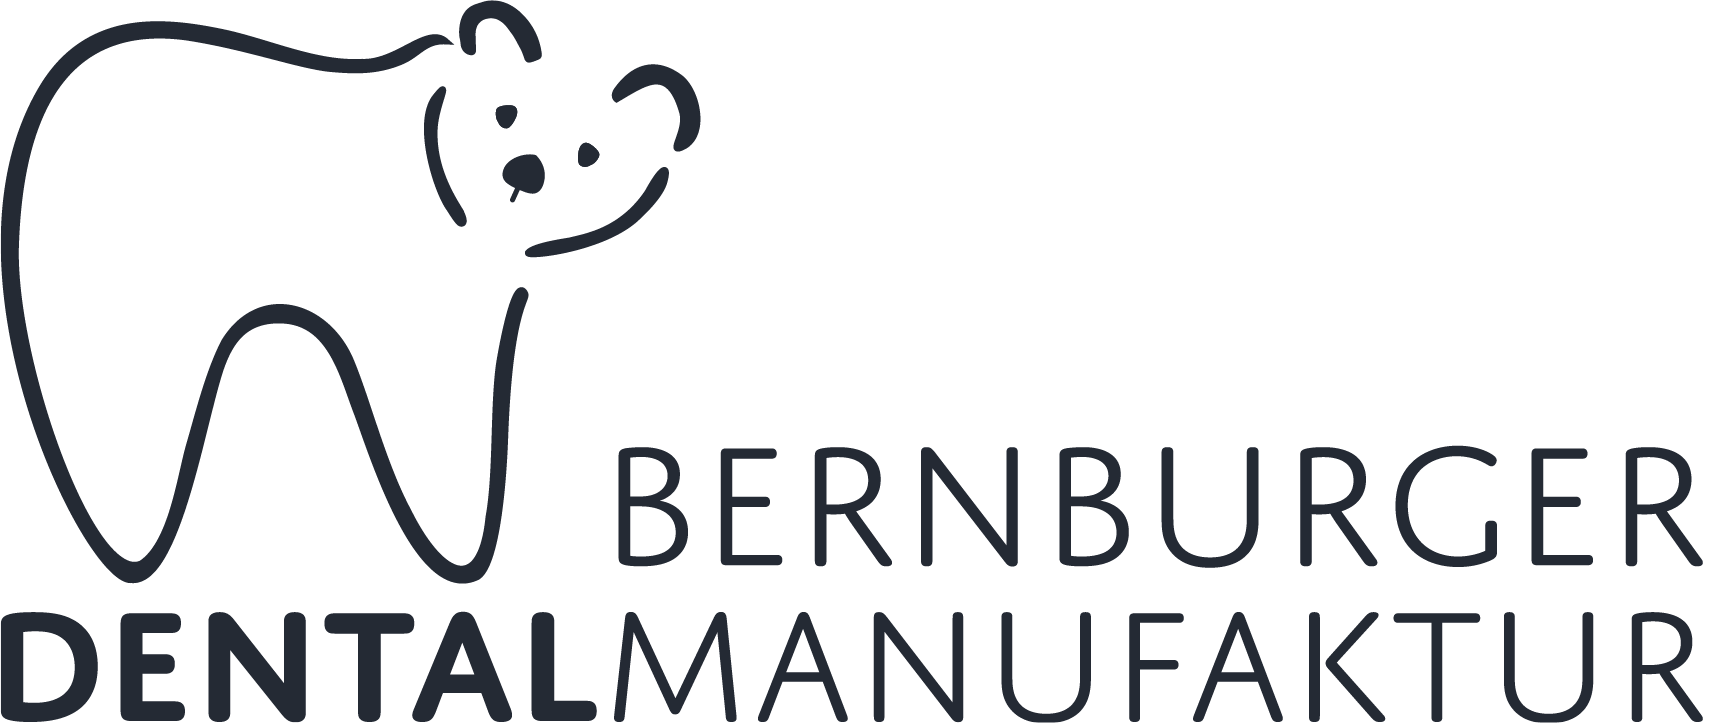 Bernburger Dentalmanufaktur GmbH